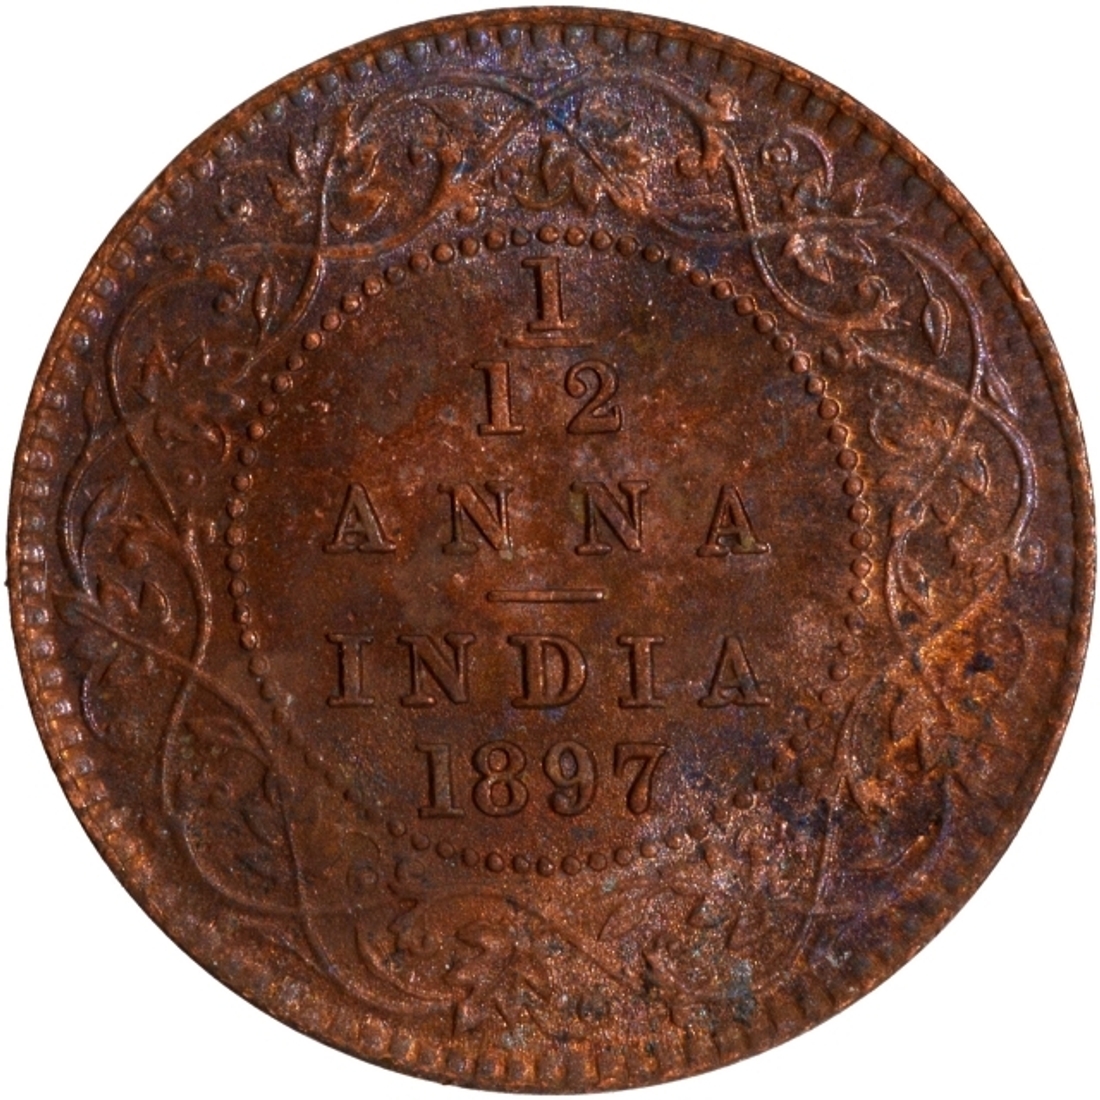 Uncirculated Copper One Twelfth Anna Coin of Victoria Empress of Calcutta Mint of 1897.